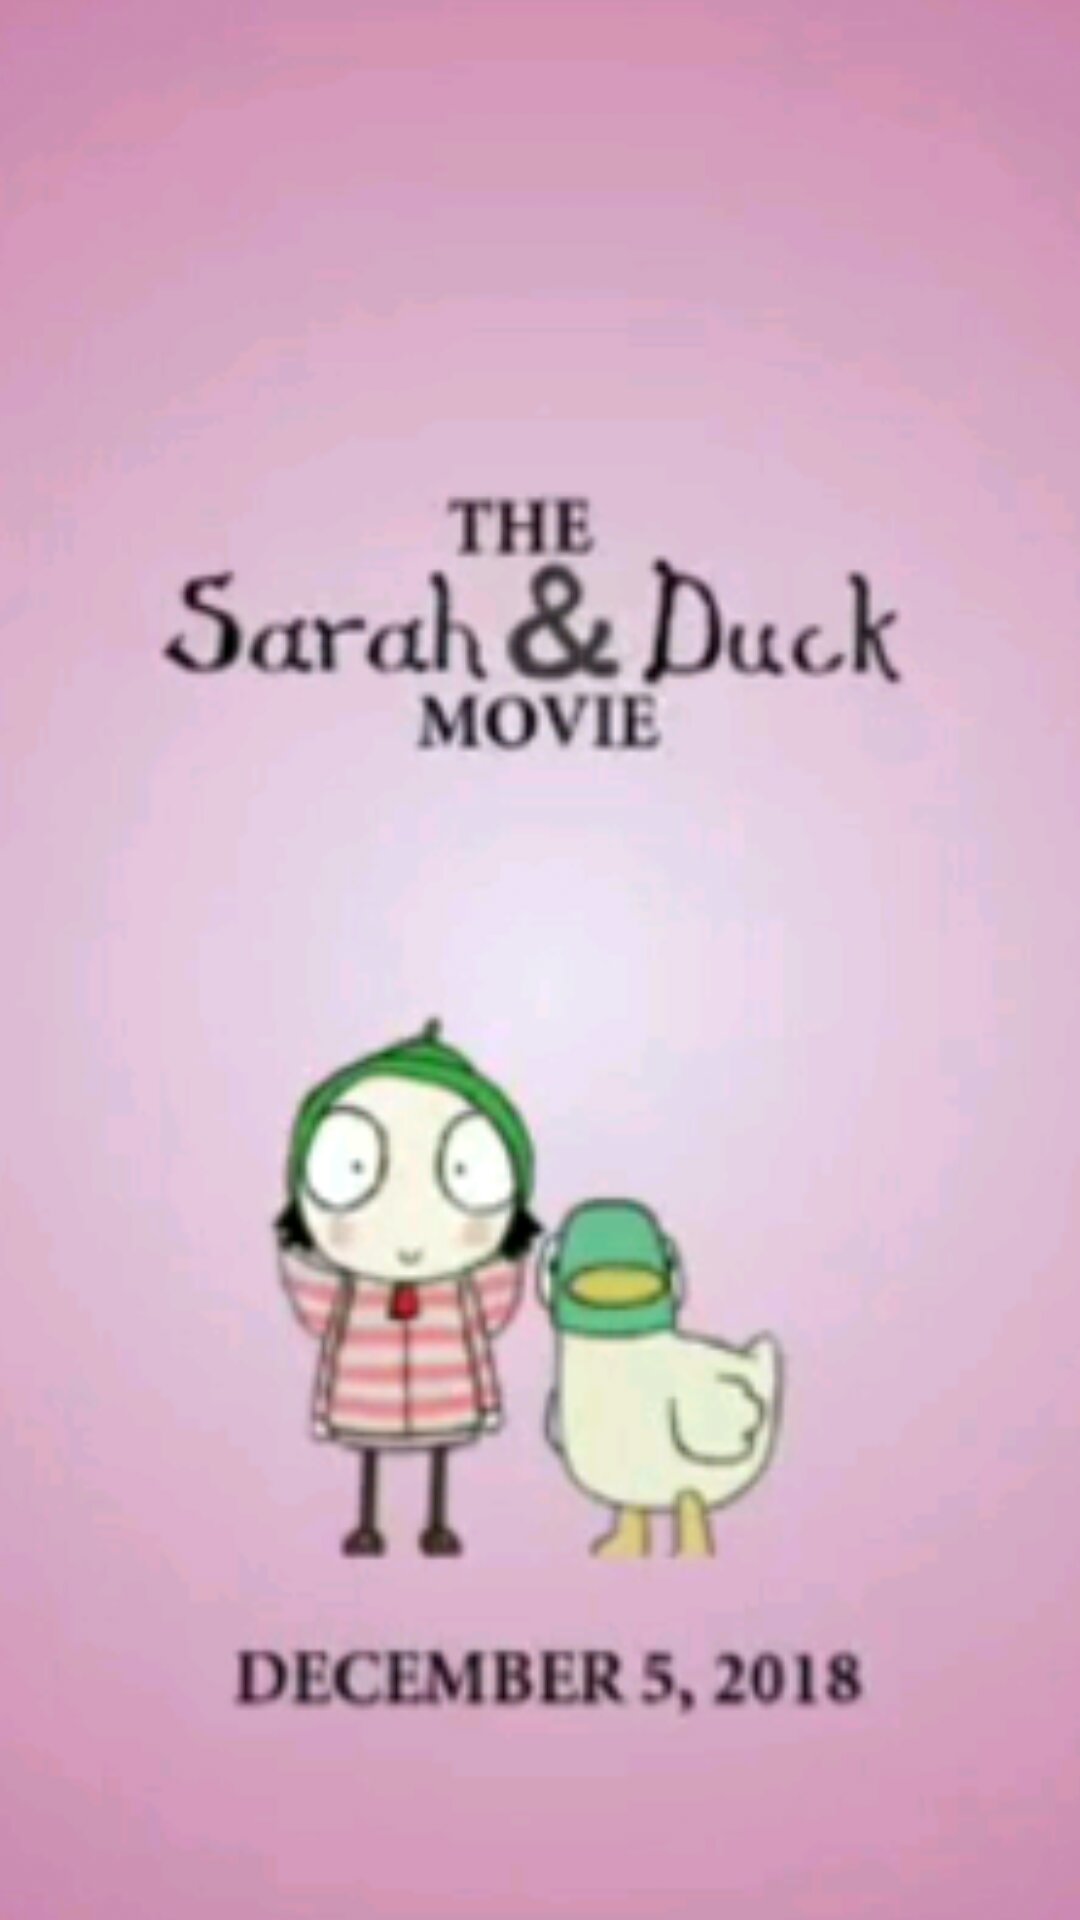 The Sarah & Duck Movie (2018) | Scratchpad | Fandom